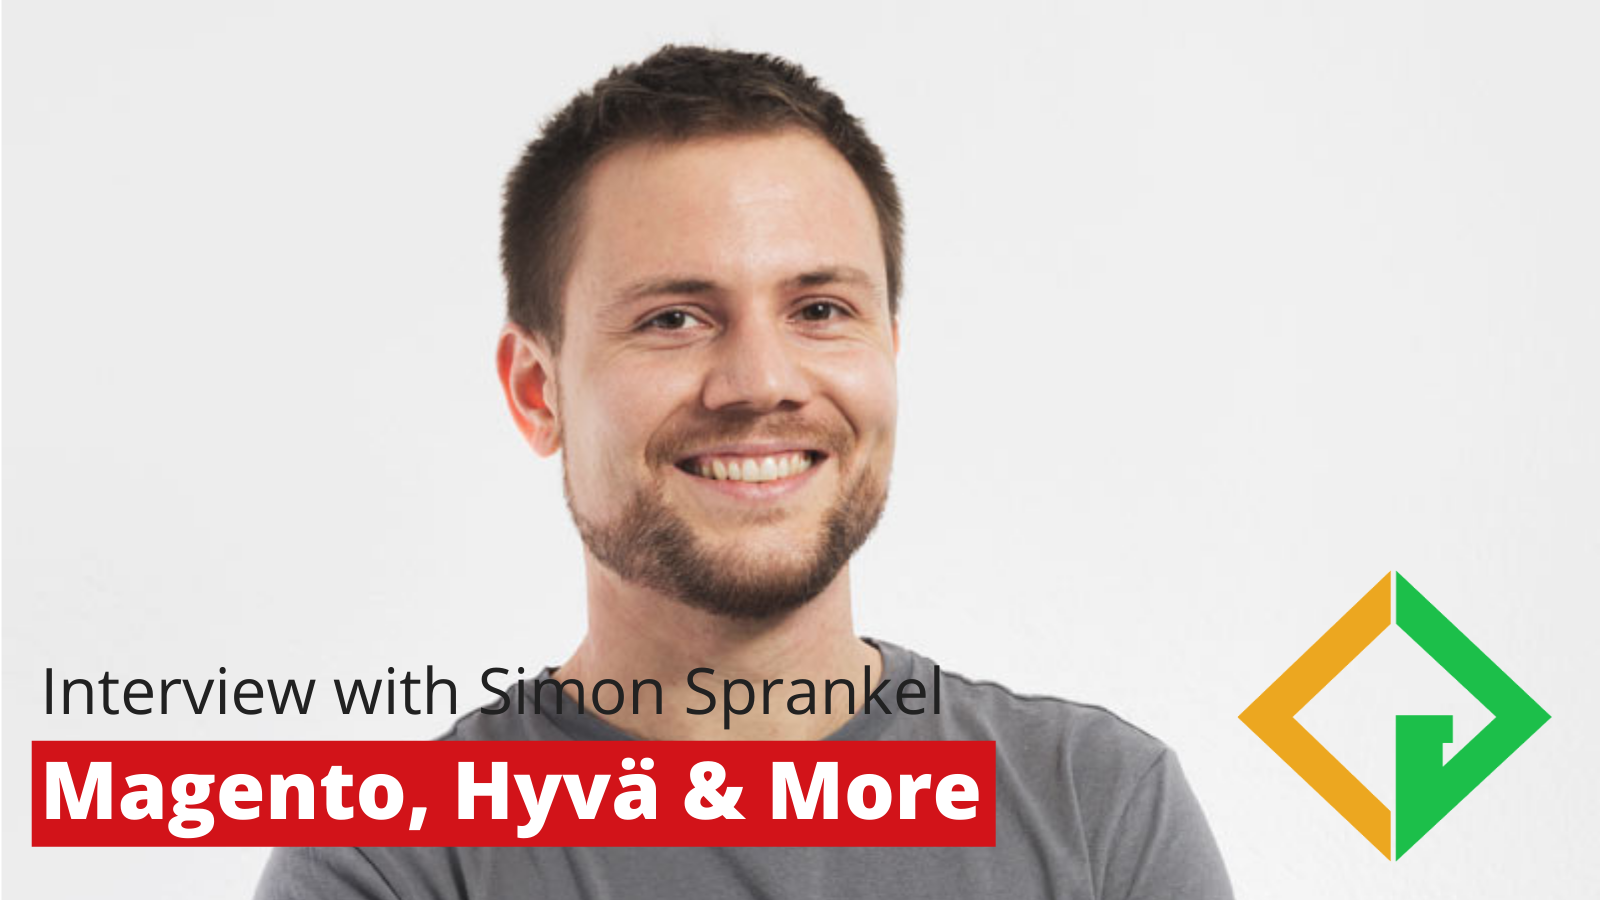 Magento, Hyvä & more - Interview with Simon Sprankel